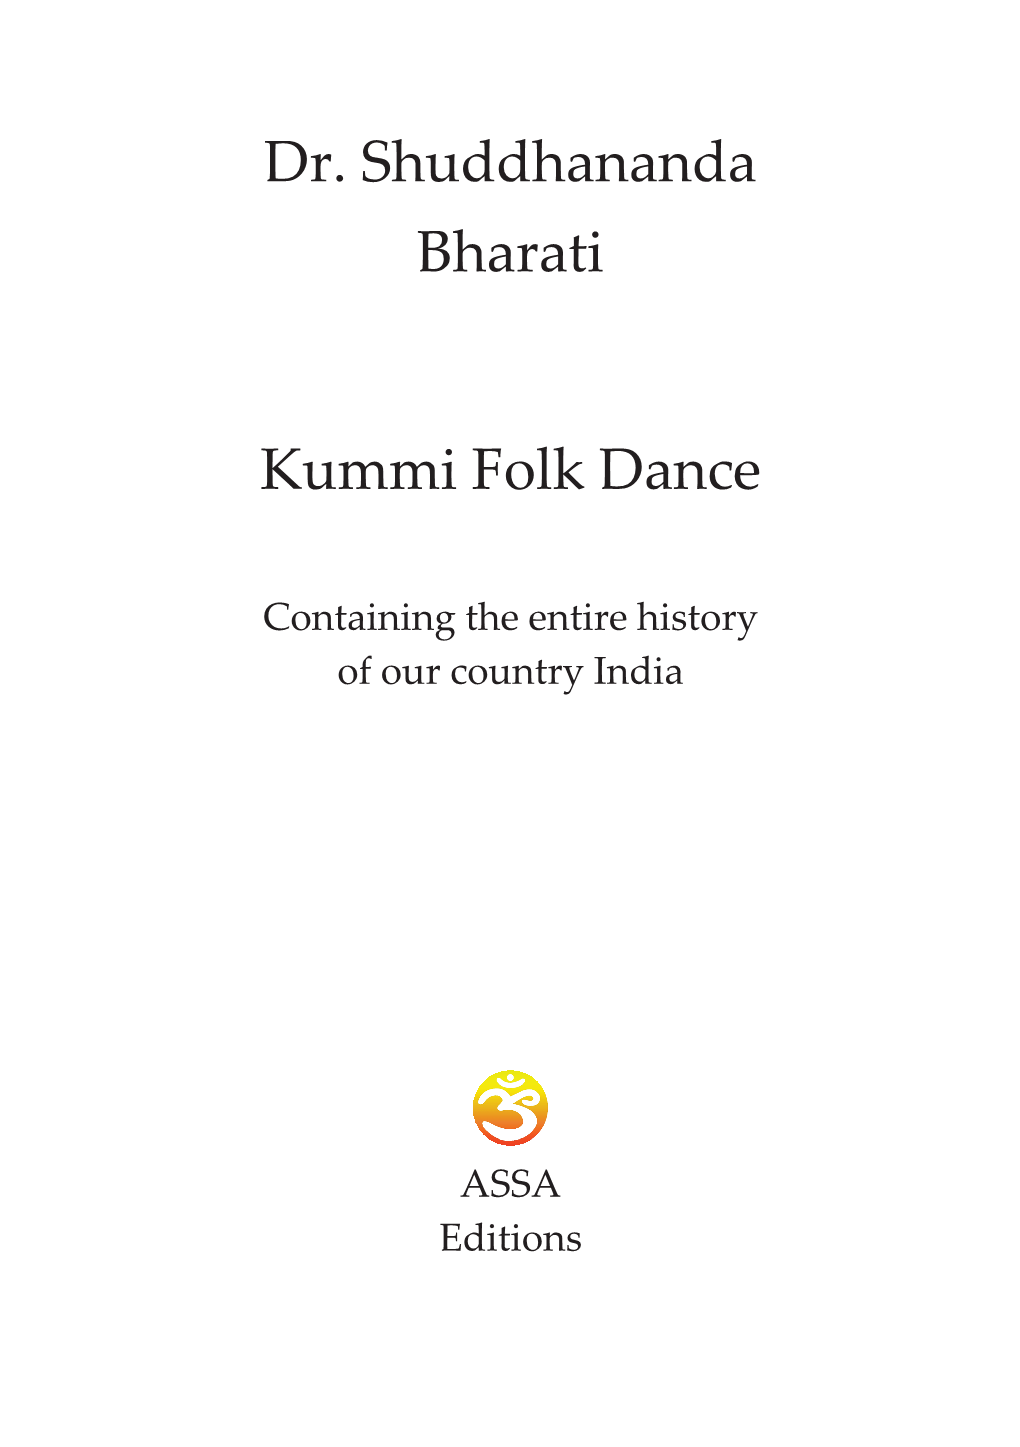 Dr. Shuddhananda Bharati Kummi Folk Dance